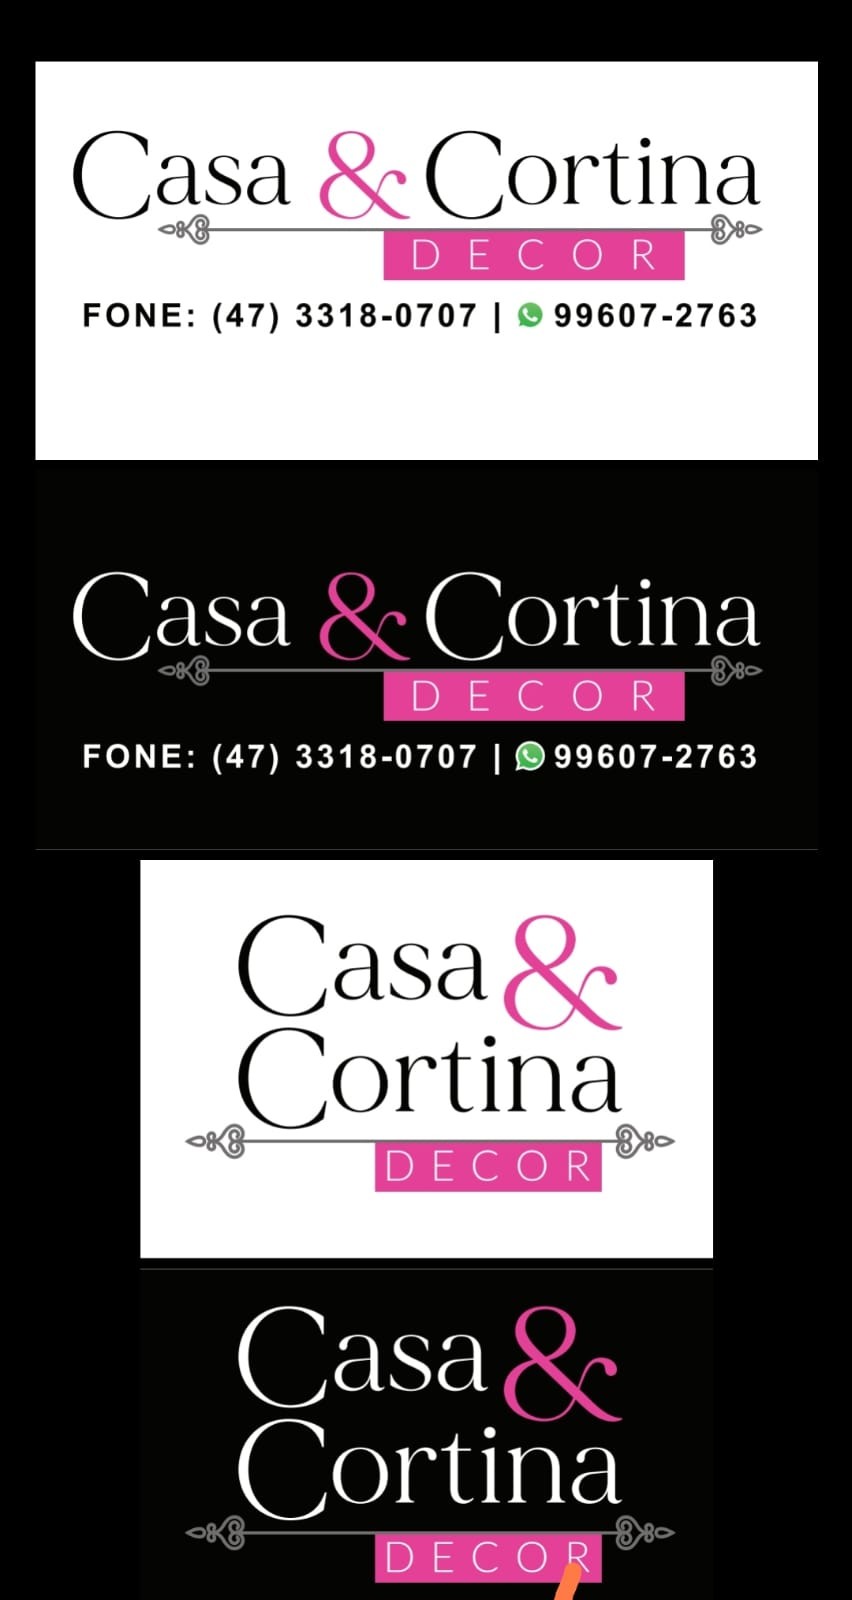 Logotipo Casa & Cortina Decor